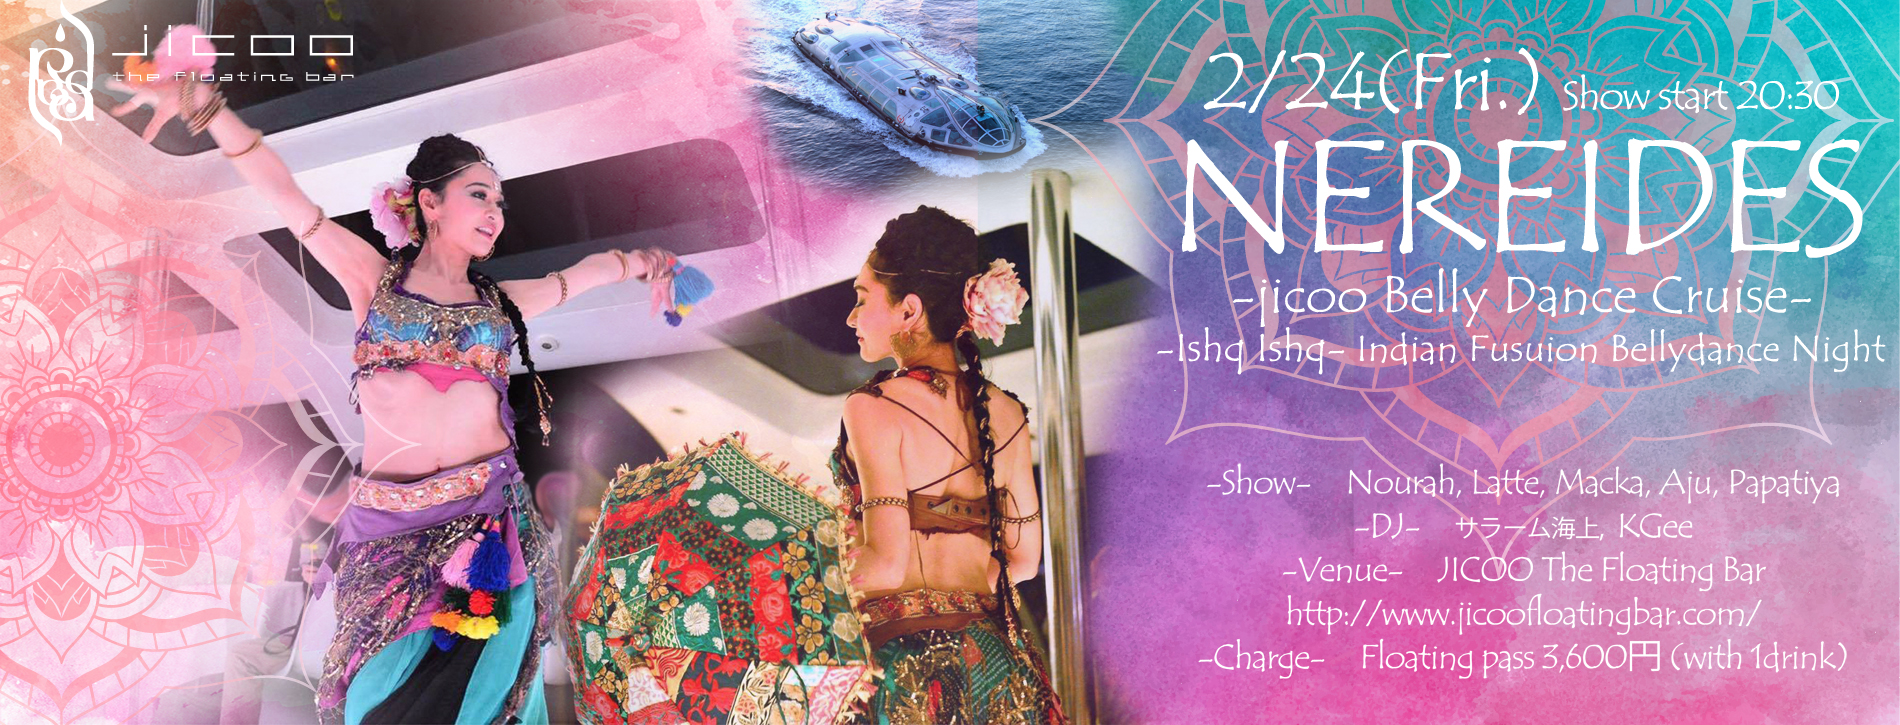 2.24 Nereides -Ishq Ishq- Indian Fusion Bellydance Night